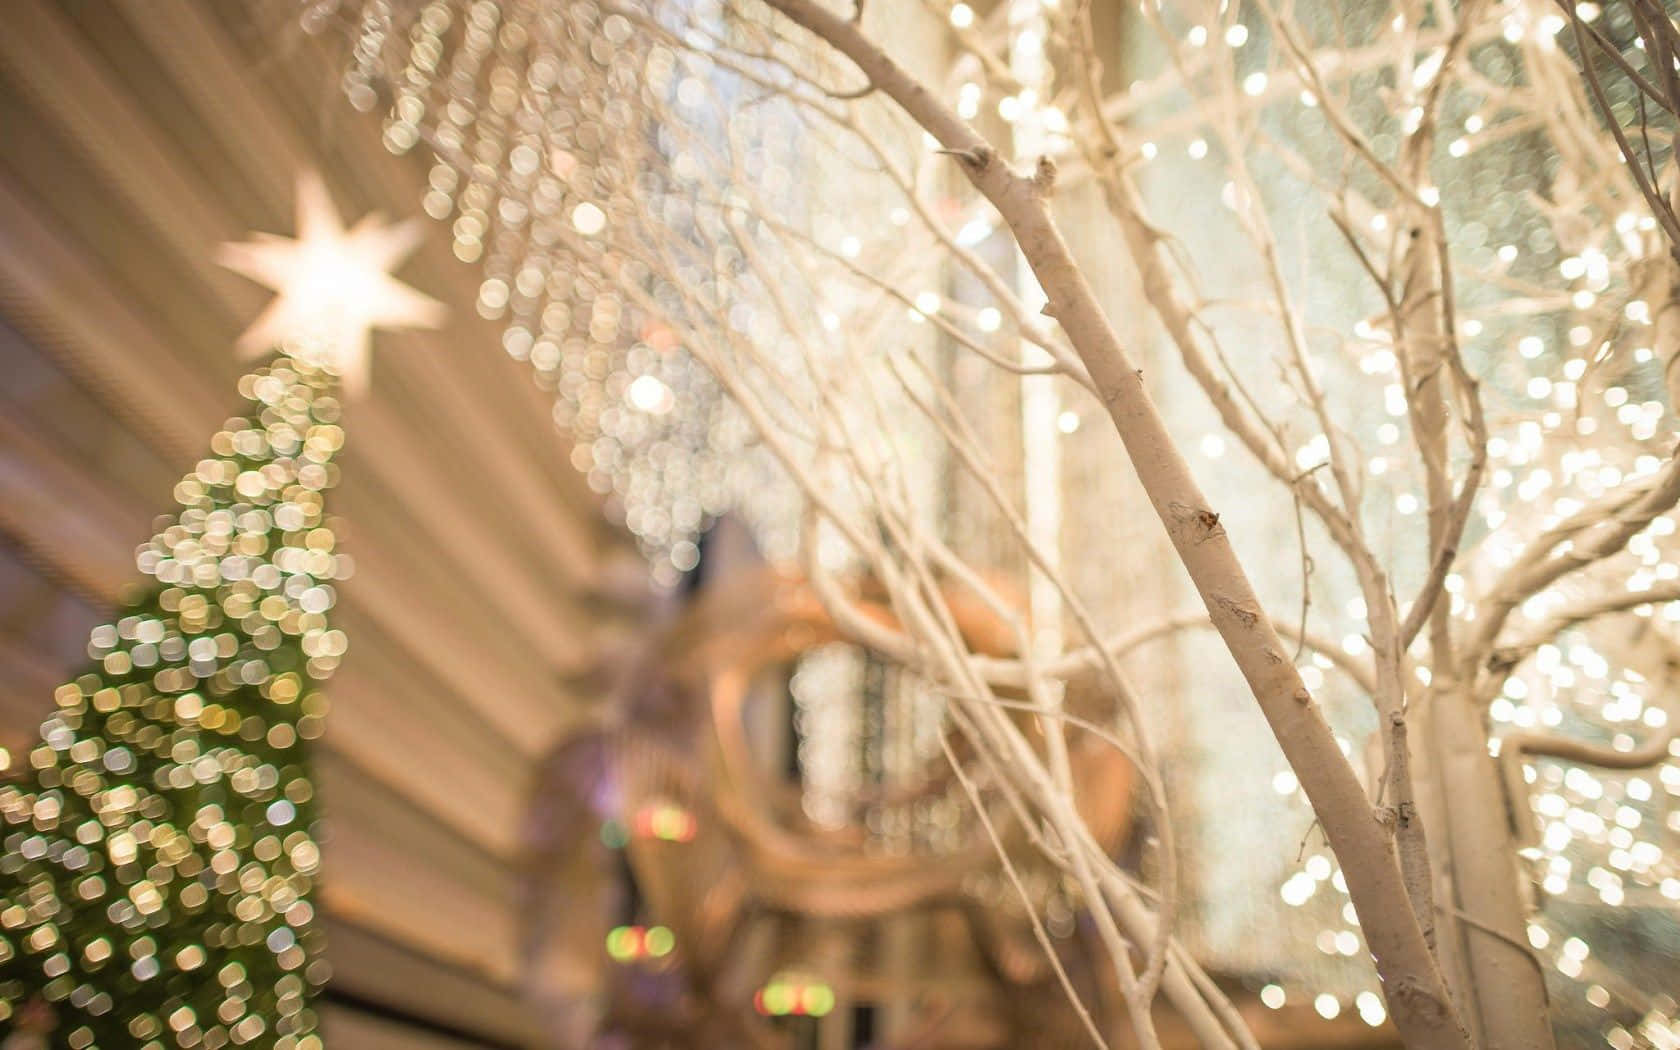 Enchanting Christmas lights brighten up the festive season!